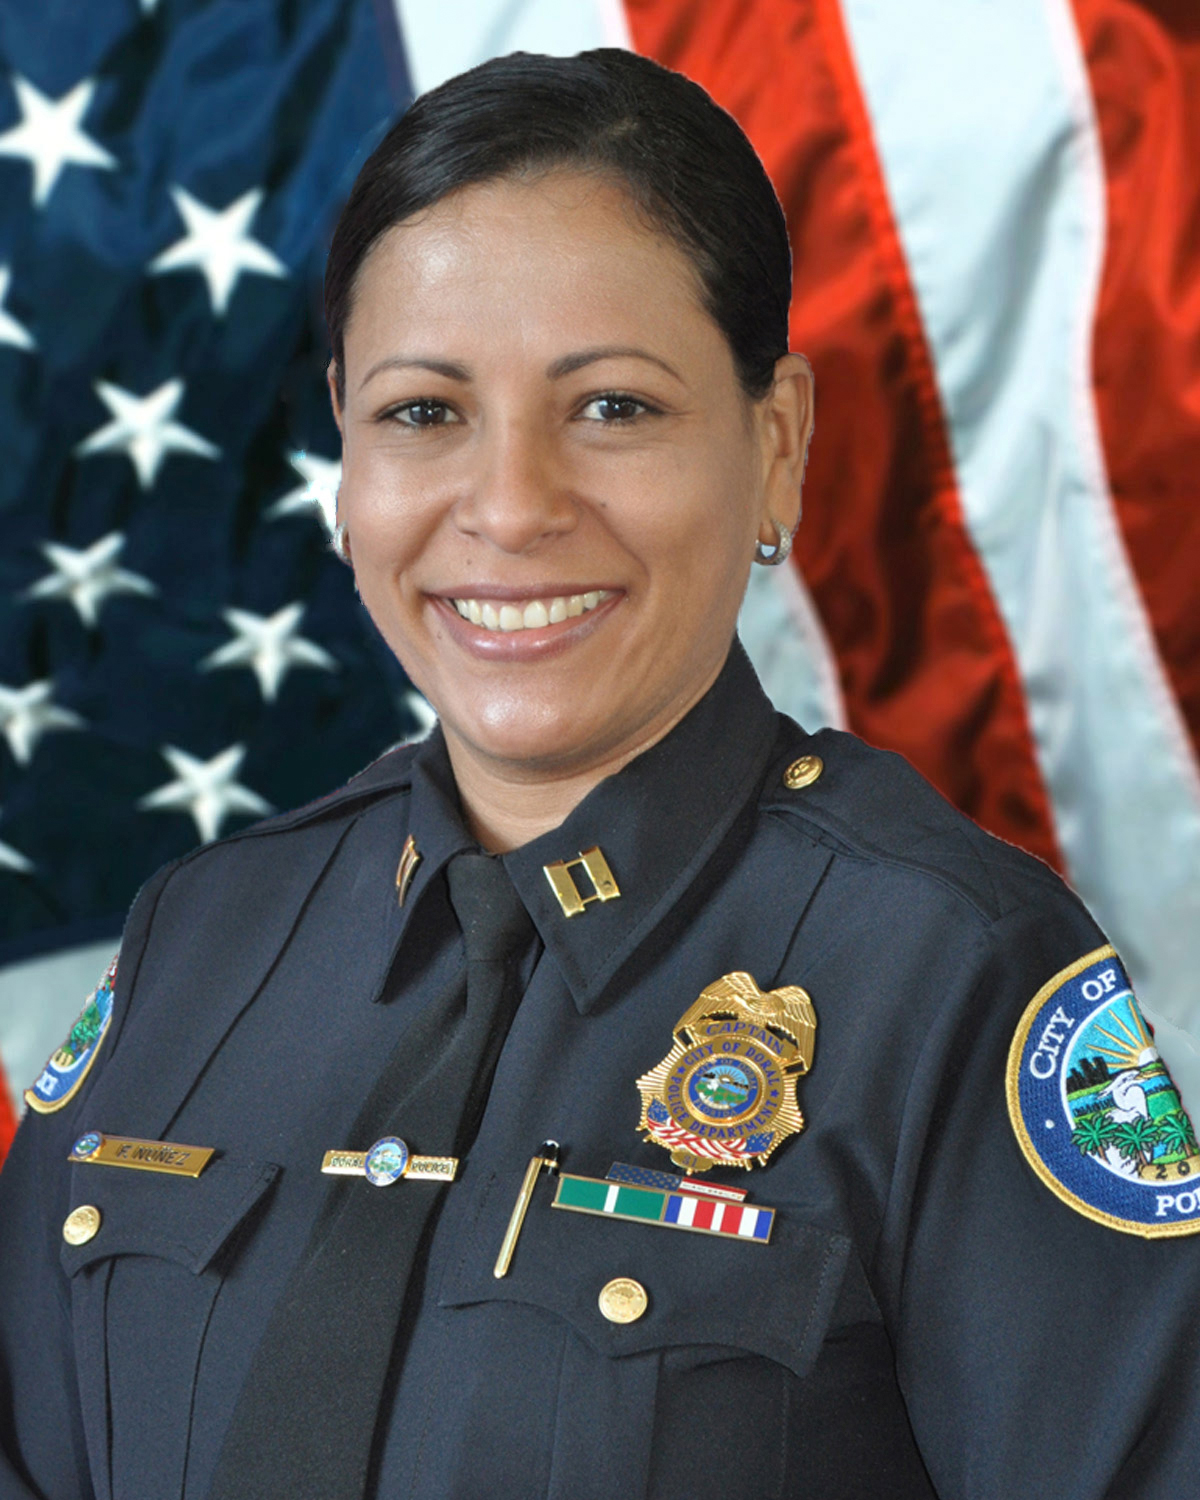 Us Police Badge Lieutenant Miami Police FL